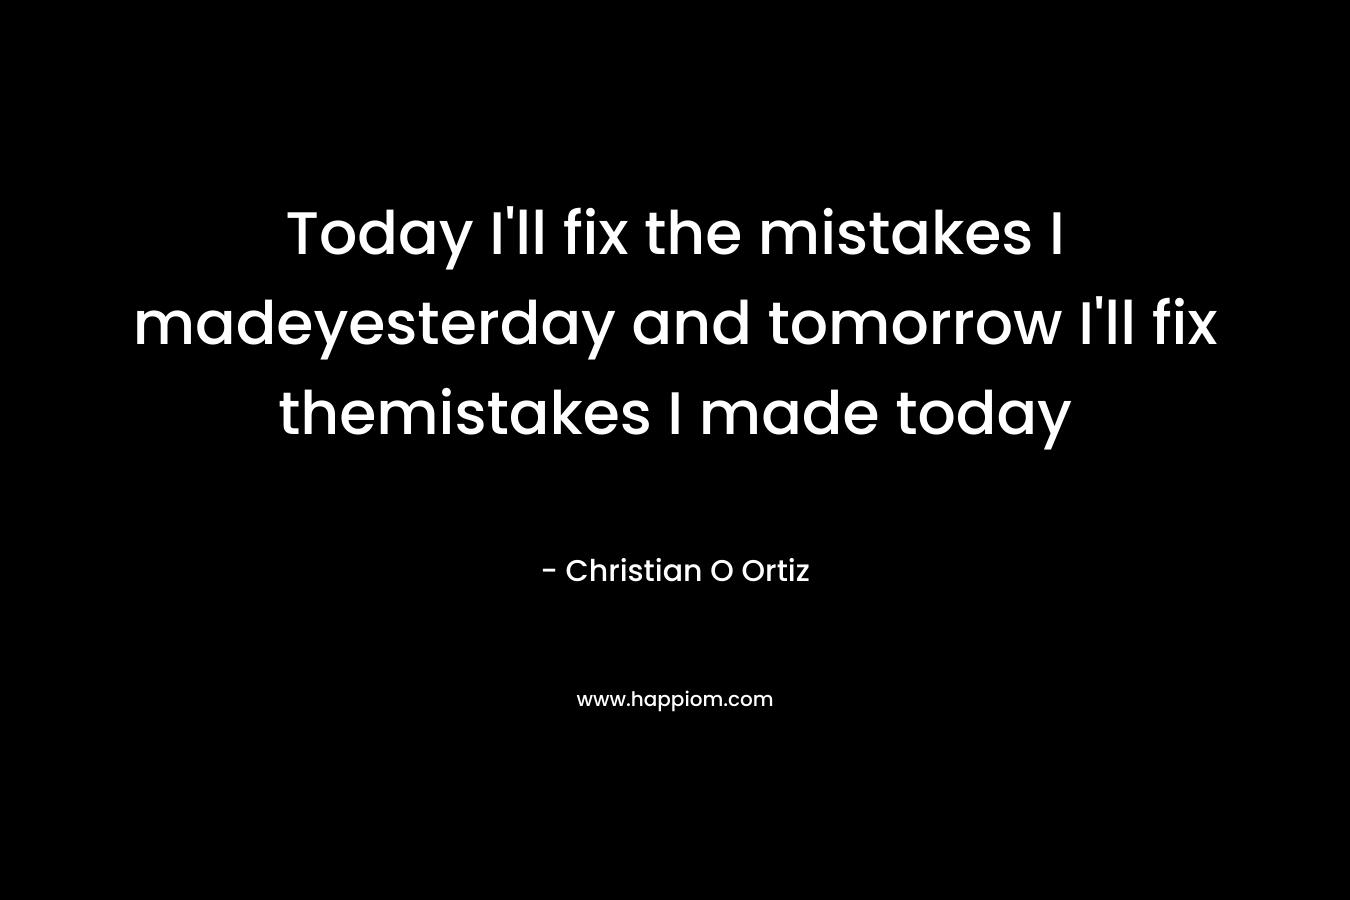 Today I'll fix the mistakes I madeyesterday and tomorrow I'll fix themistakes I made today